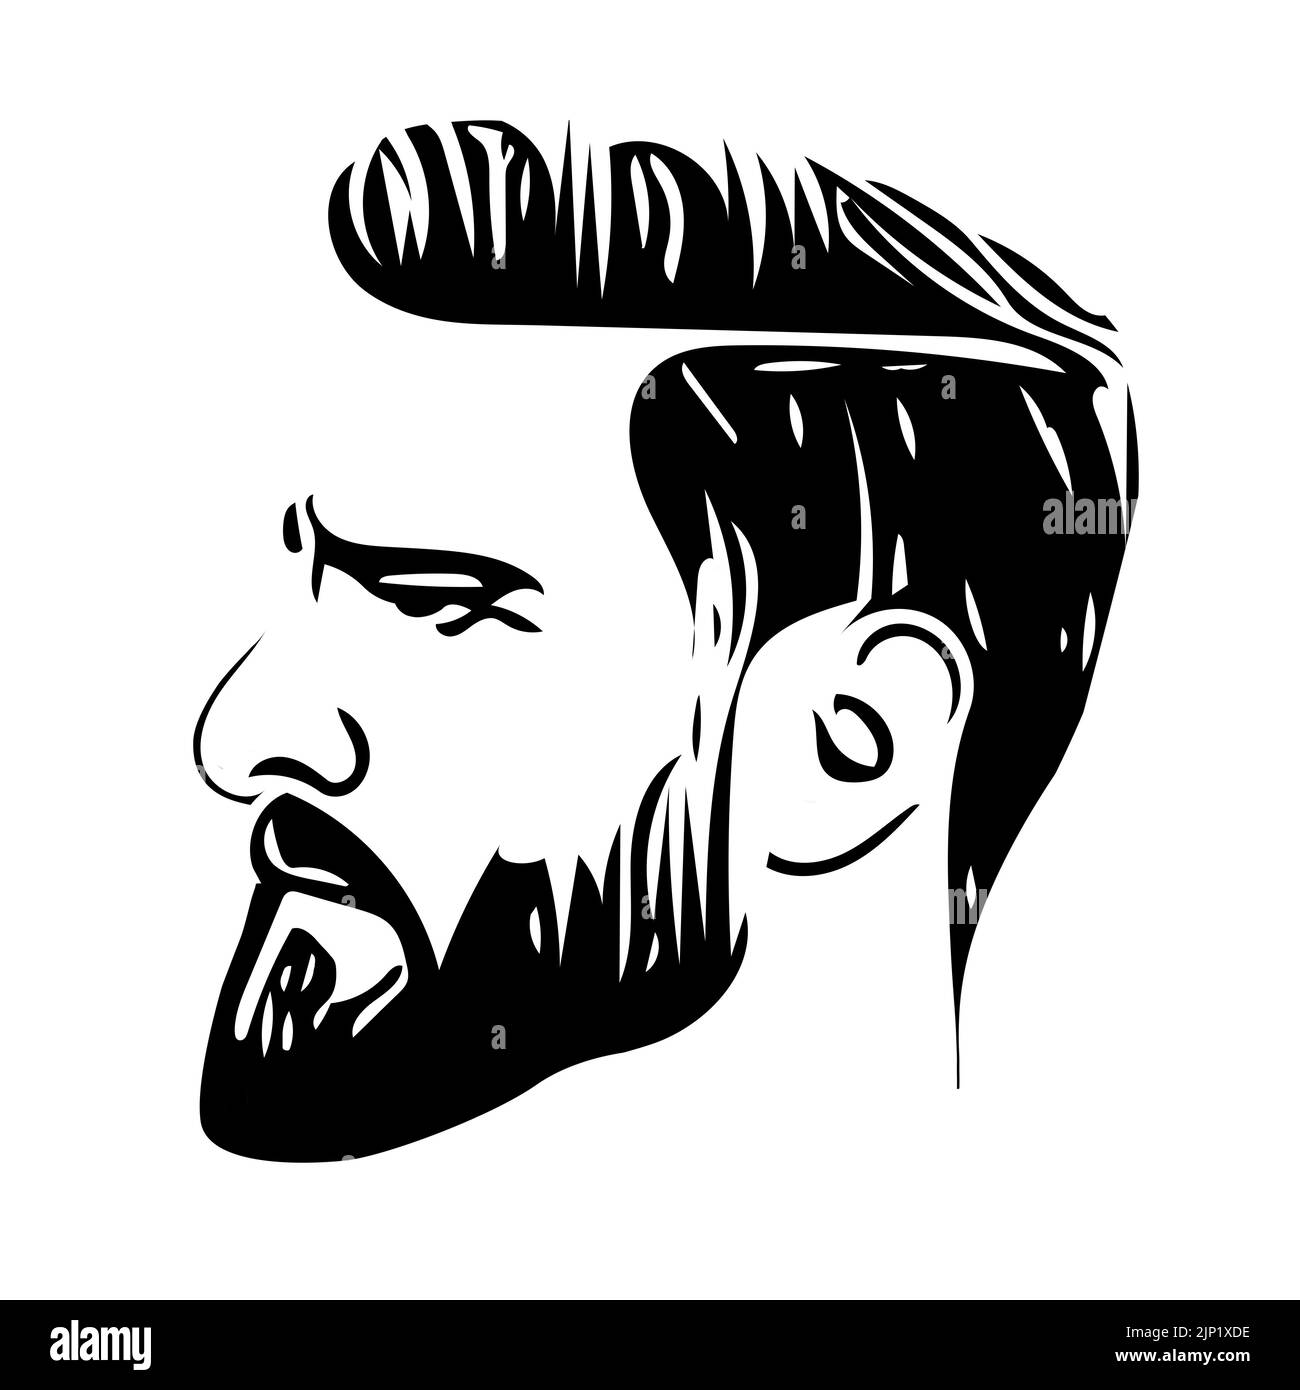 Beard guy logo Black and White Stock Photos & Images - Alamy